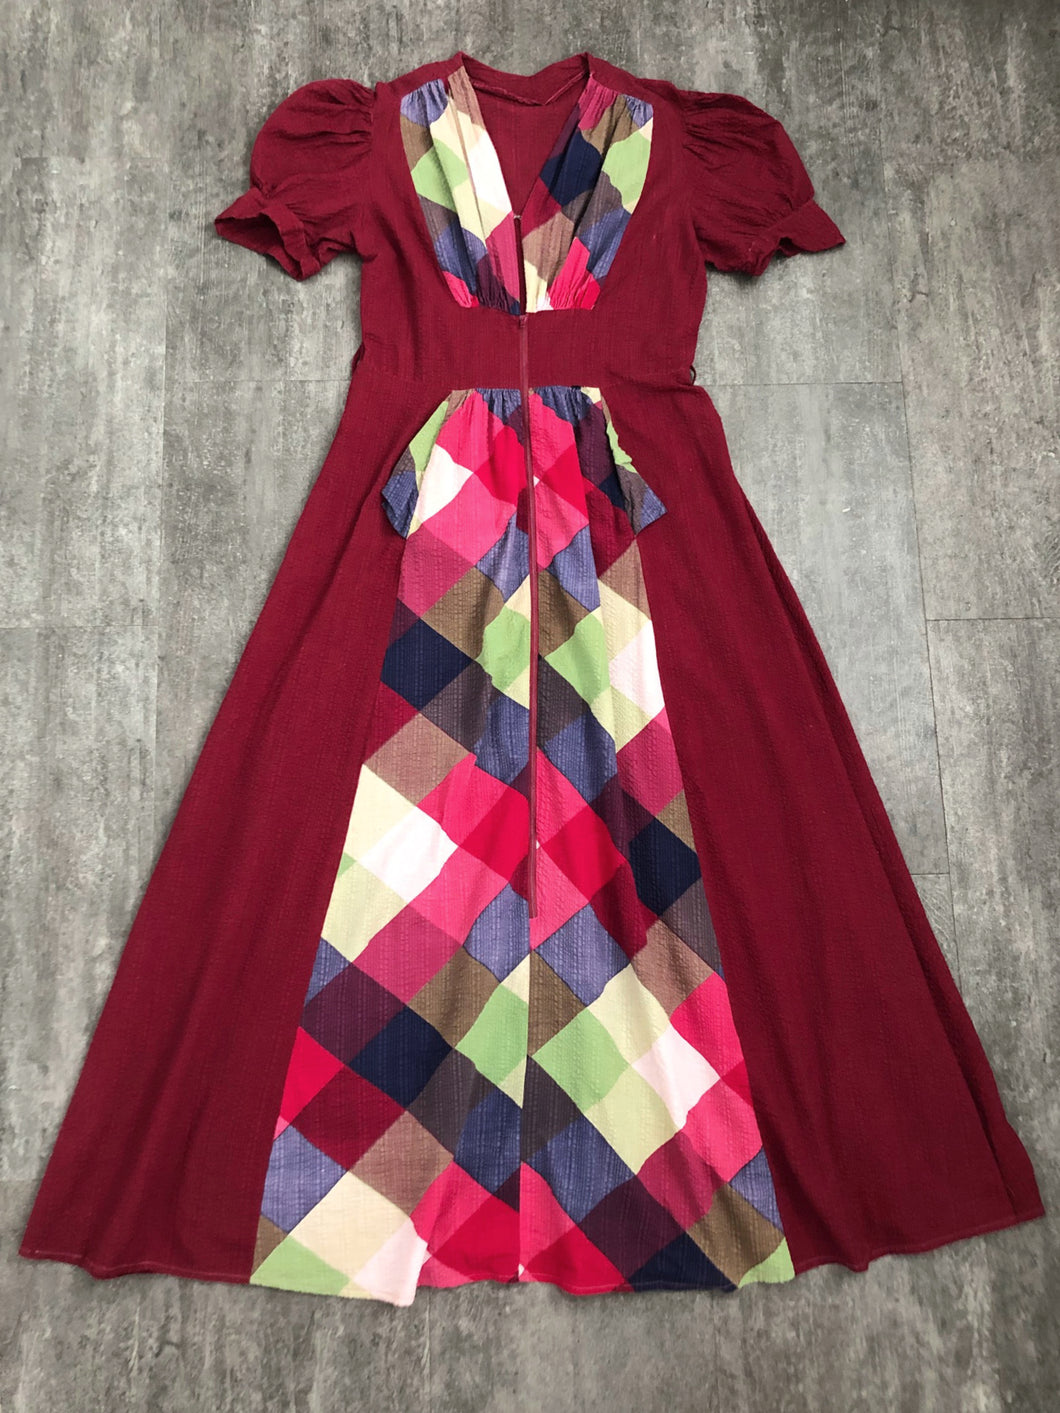 1930s 1940s dressing gown . vintage house dress . size l